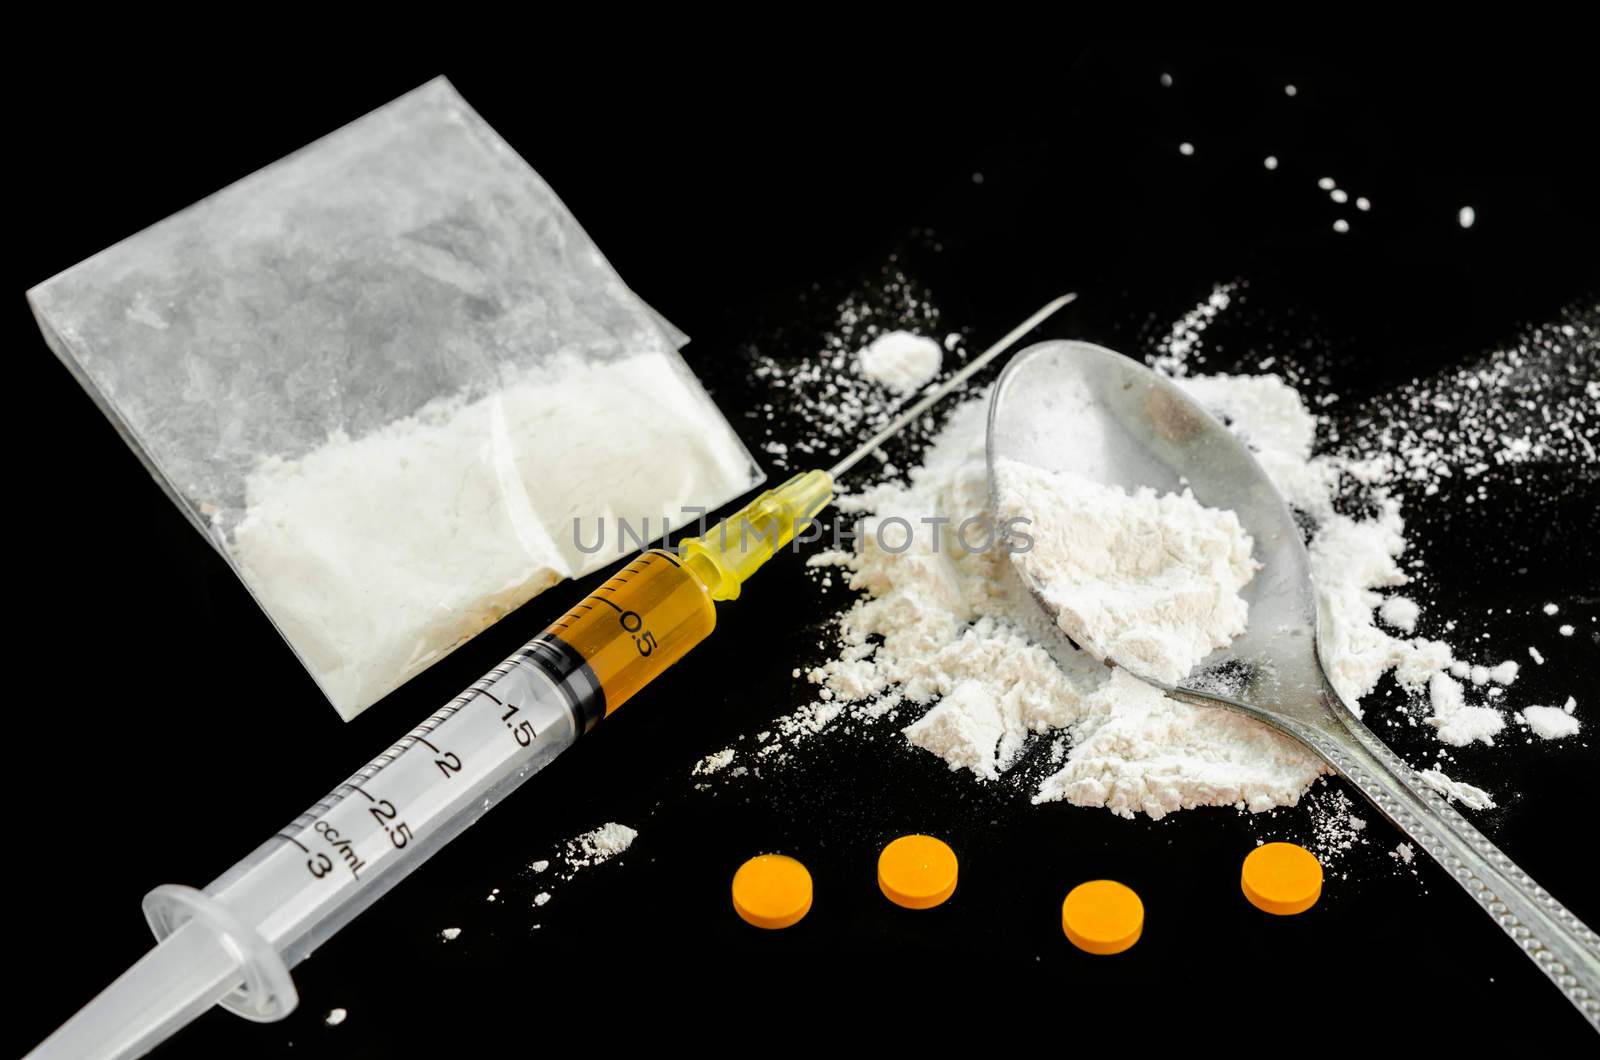 Drug syringe, amphetamine tablets and cooked heroin on spoon.